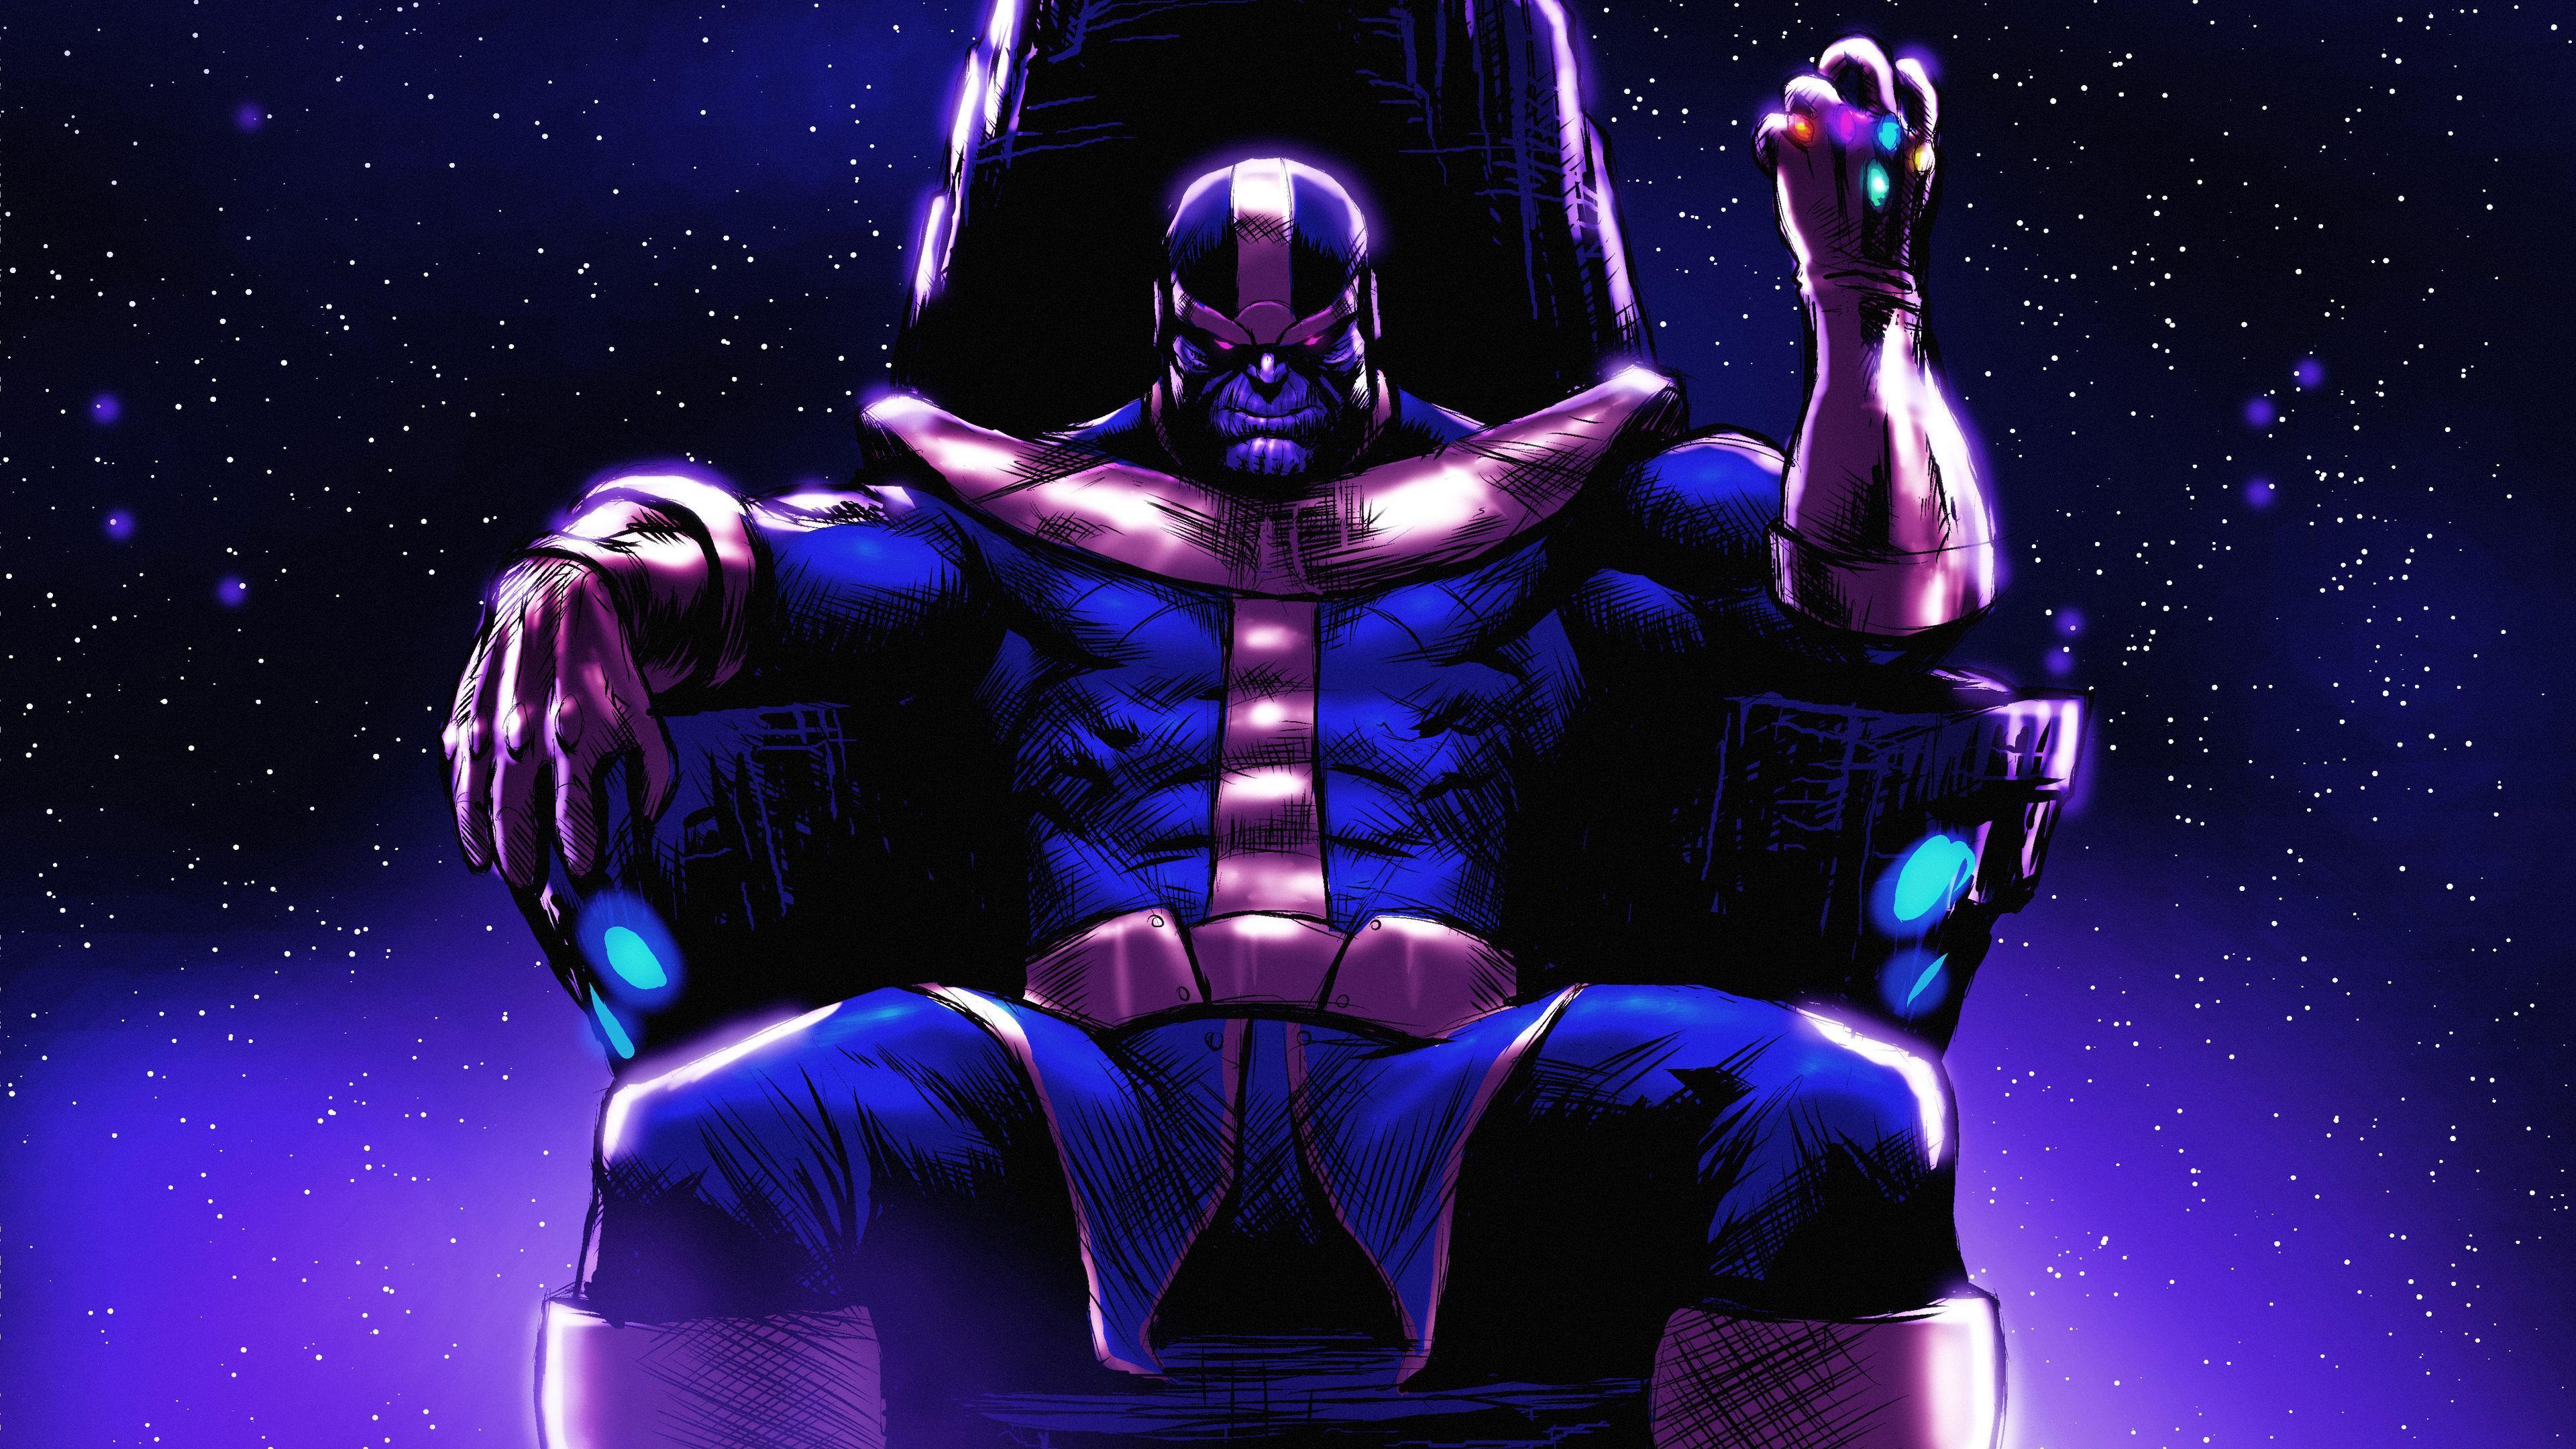 Thanos On His Throne Thanos Wallpaper, Superheroes Wallpaper, Hd Wallpaper, Digital Art Wallpaper,. Art Wallpaper, Marvel Wallpaper, Hero Wallpaper